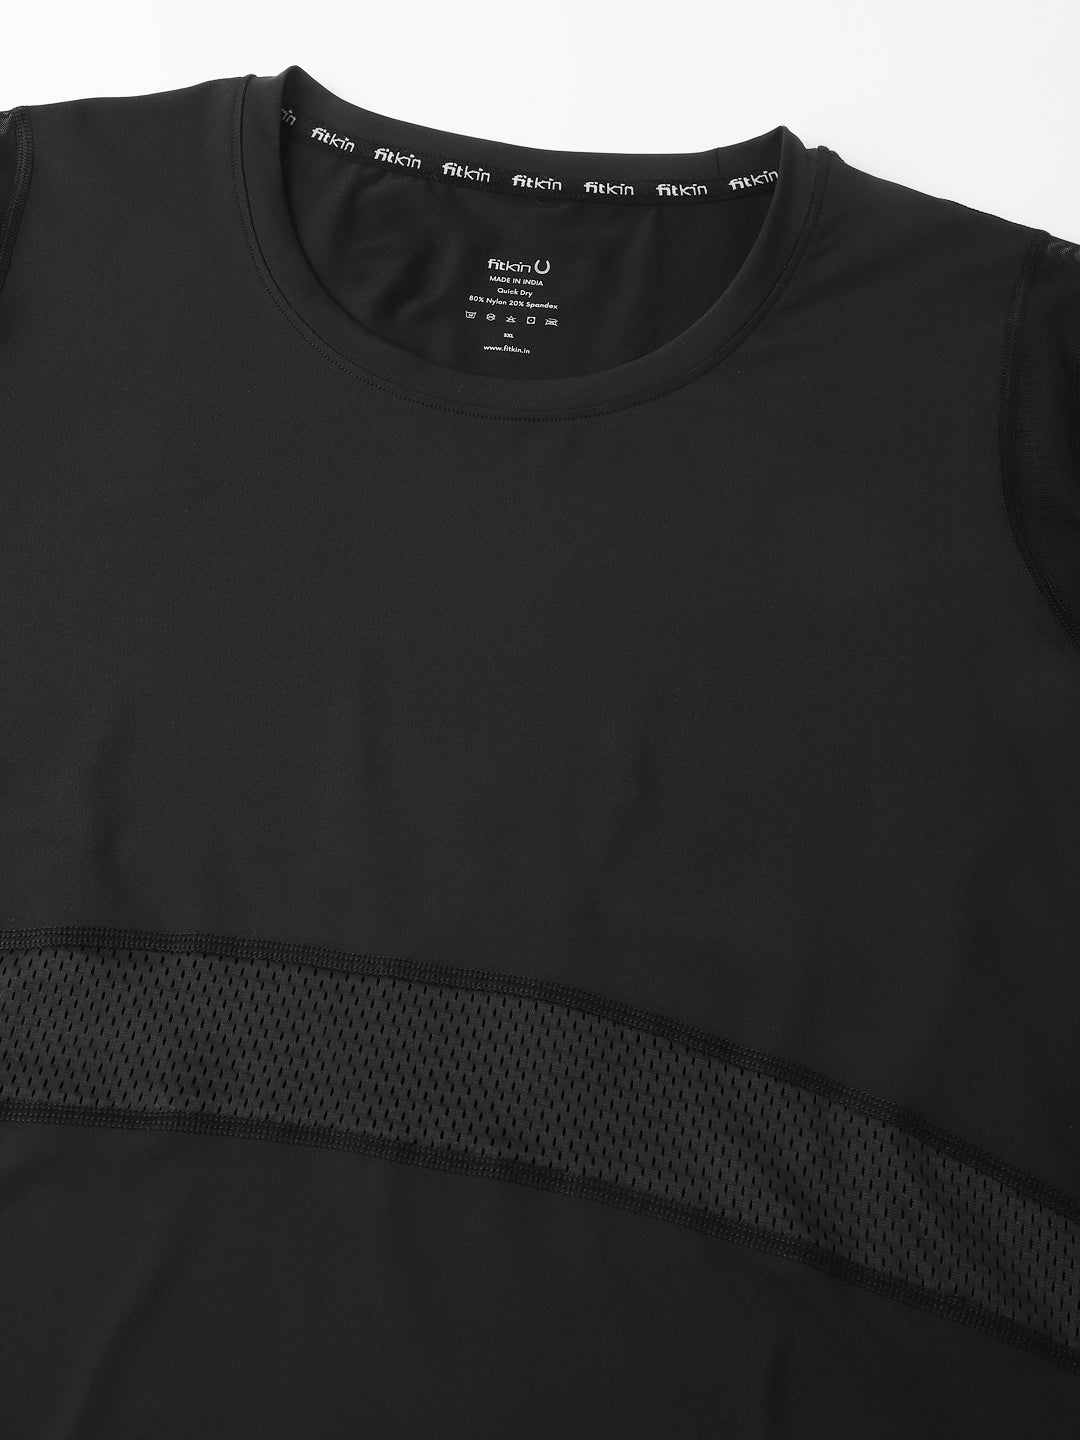 Fitkin Plus Size Black Anti-Odor Mesh Panel Longsleeve Tshirt